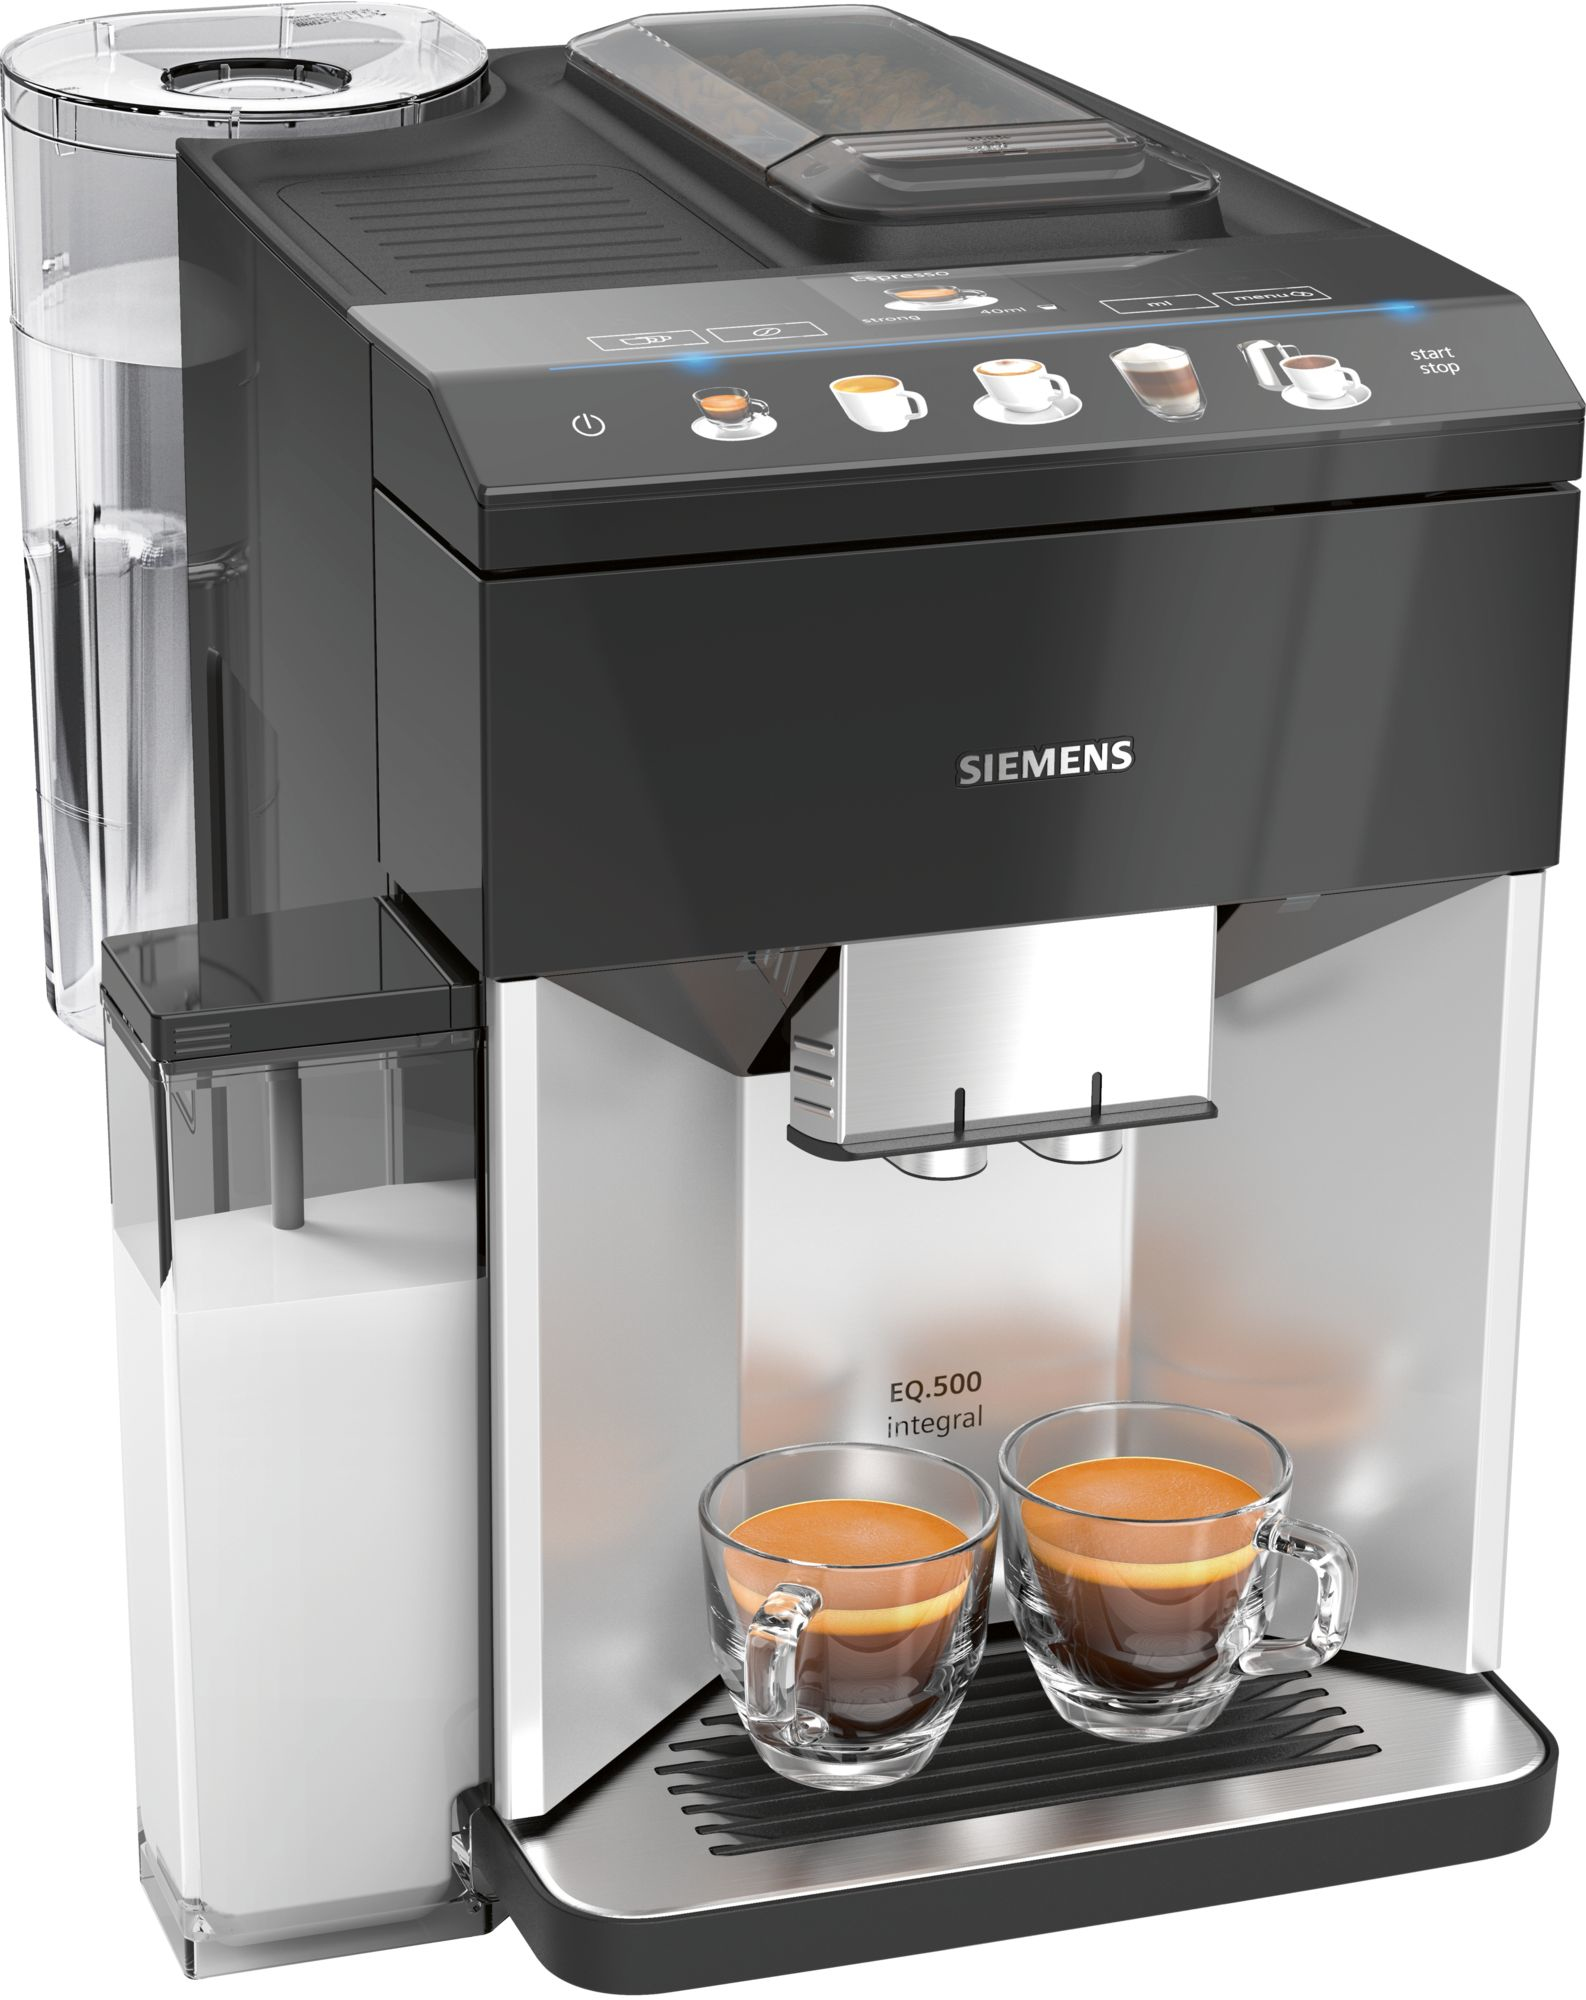 Siemens EQ.500 TQ503R01 coffee maker